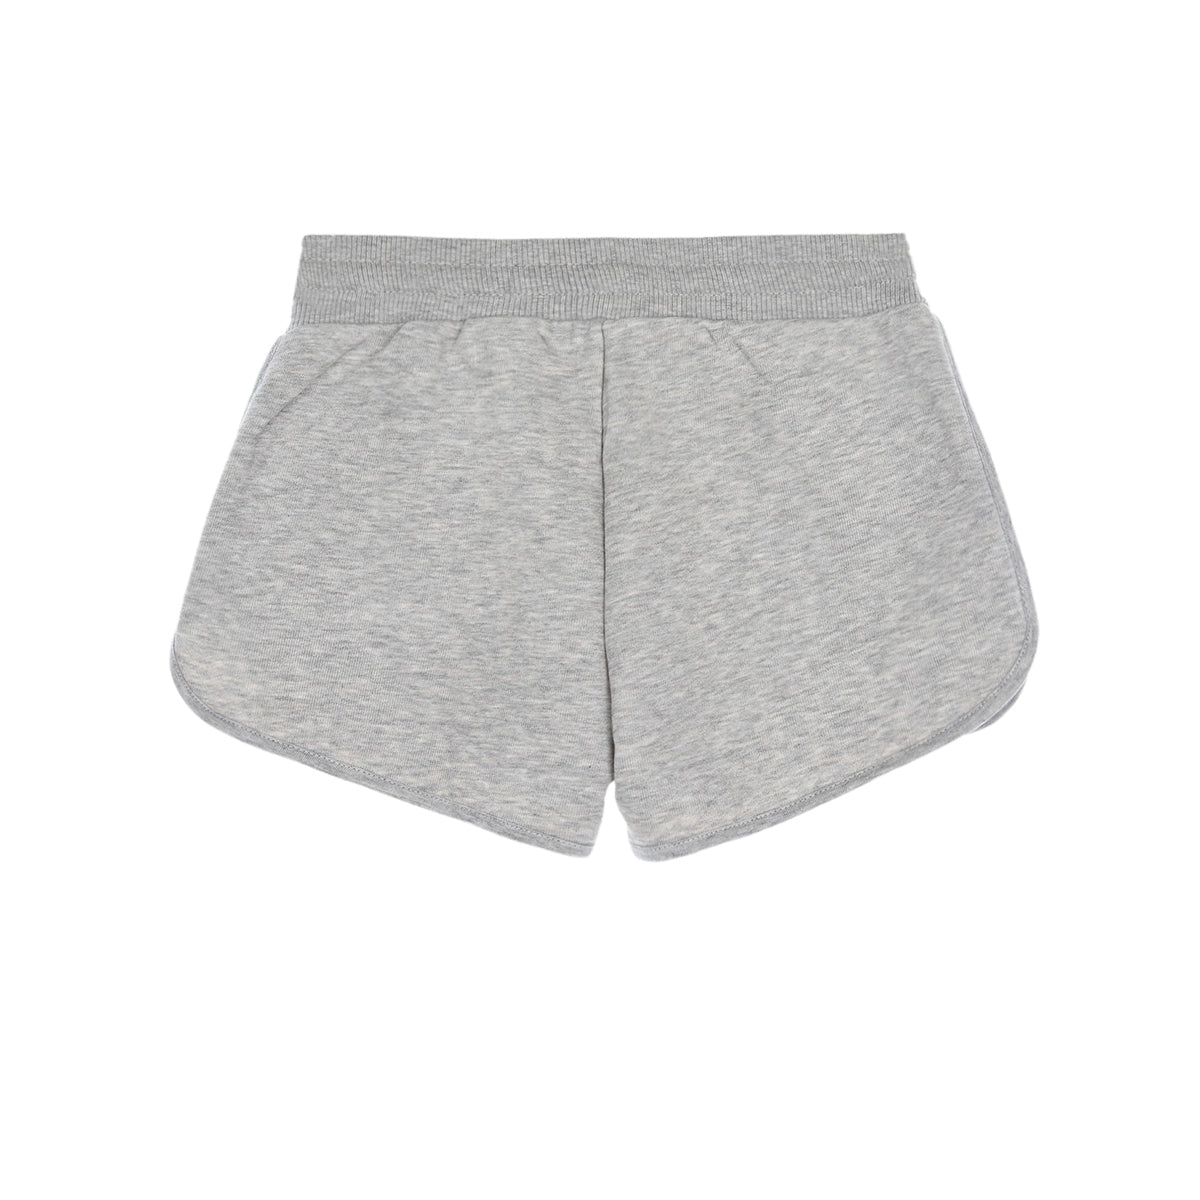 Girls Grey Cotton Shorts